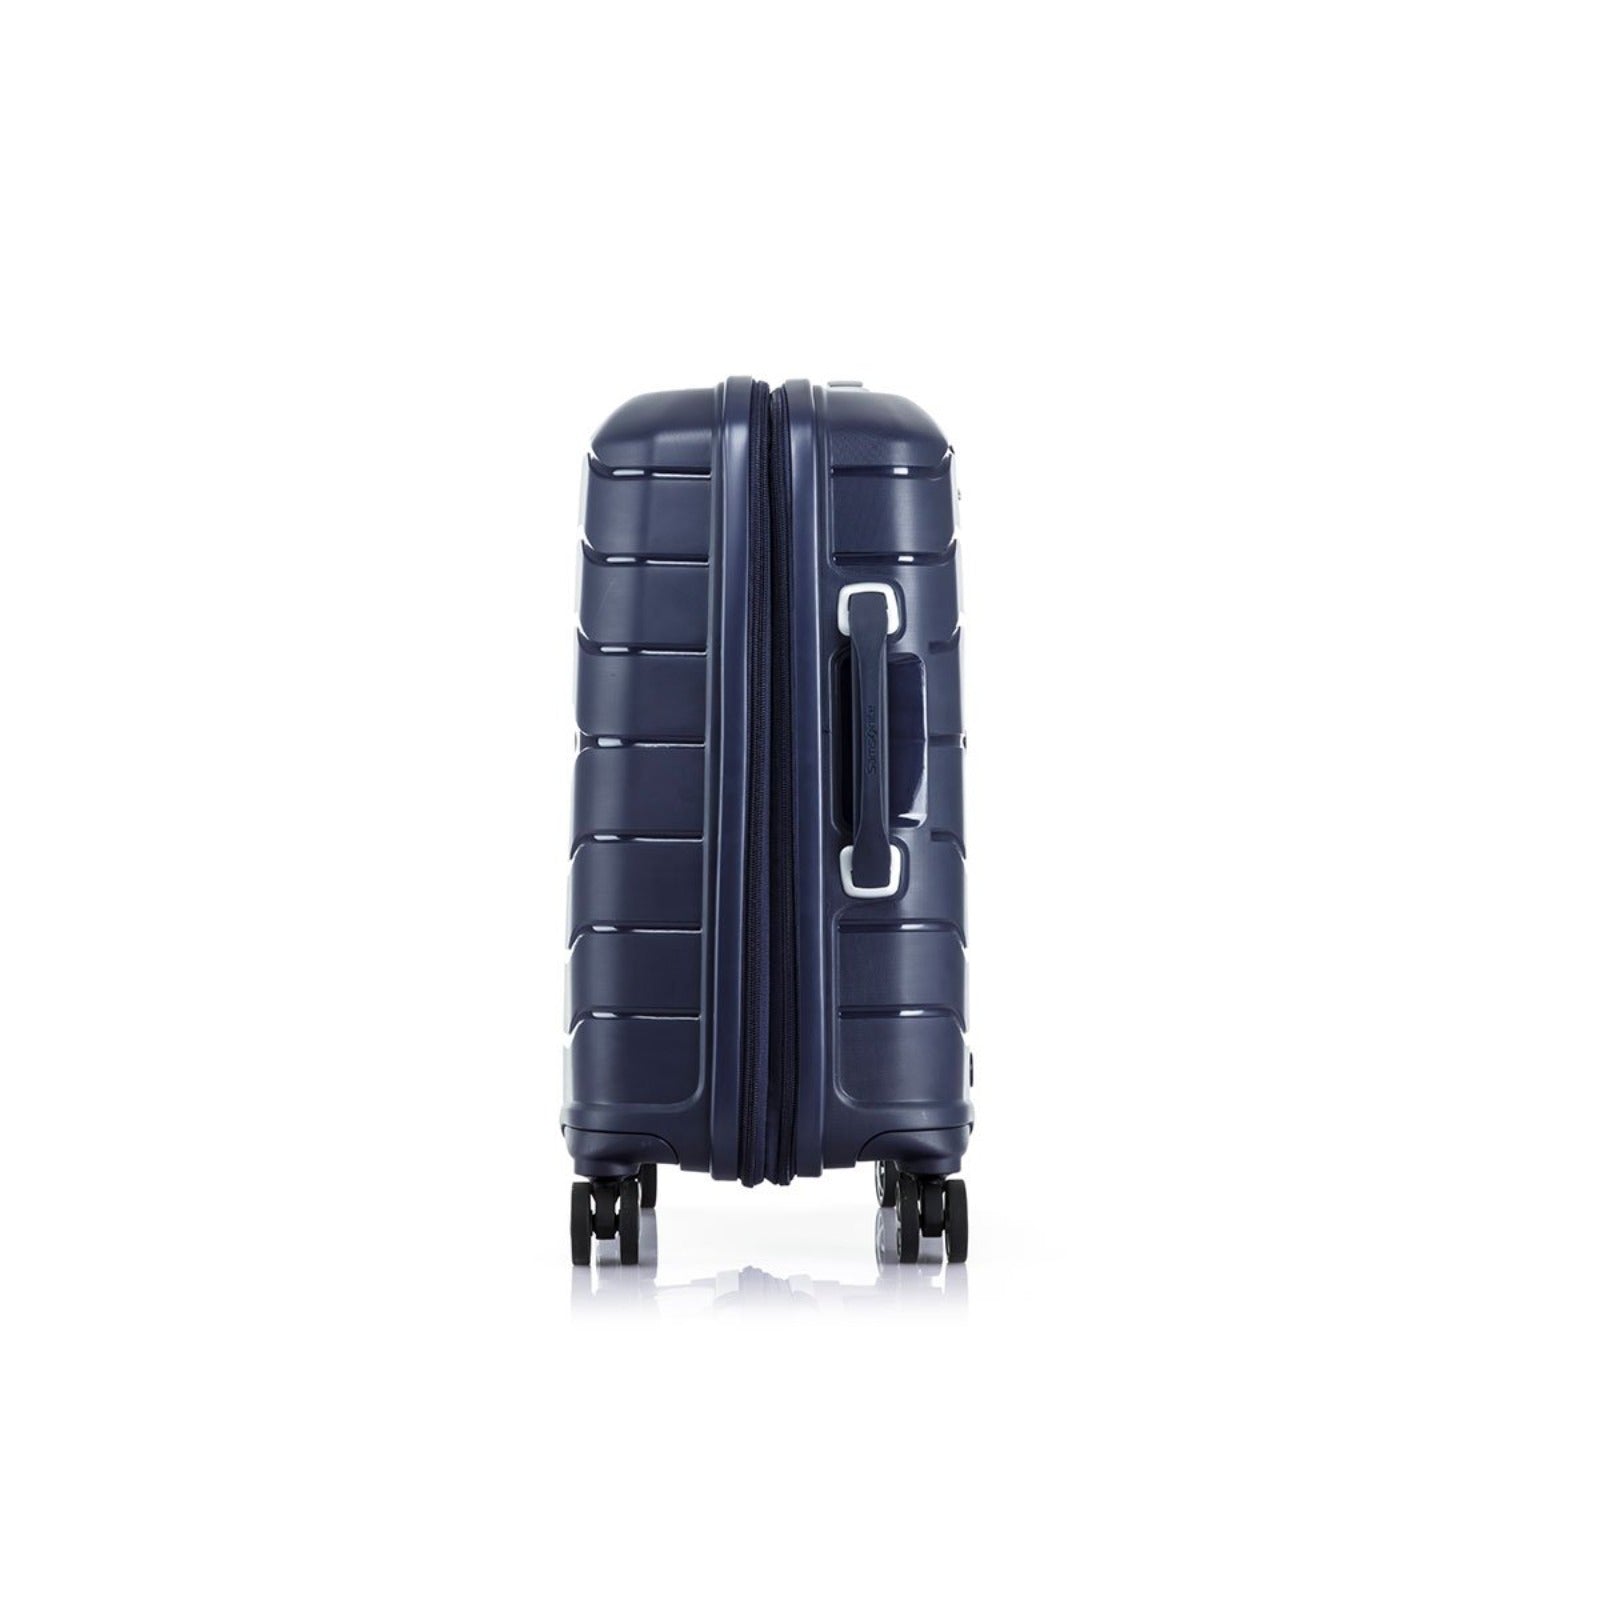 Samsonite_Oc2lite_55cm_Carry-On_Suitcase_Navy_Side